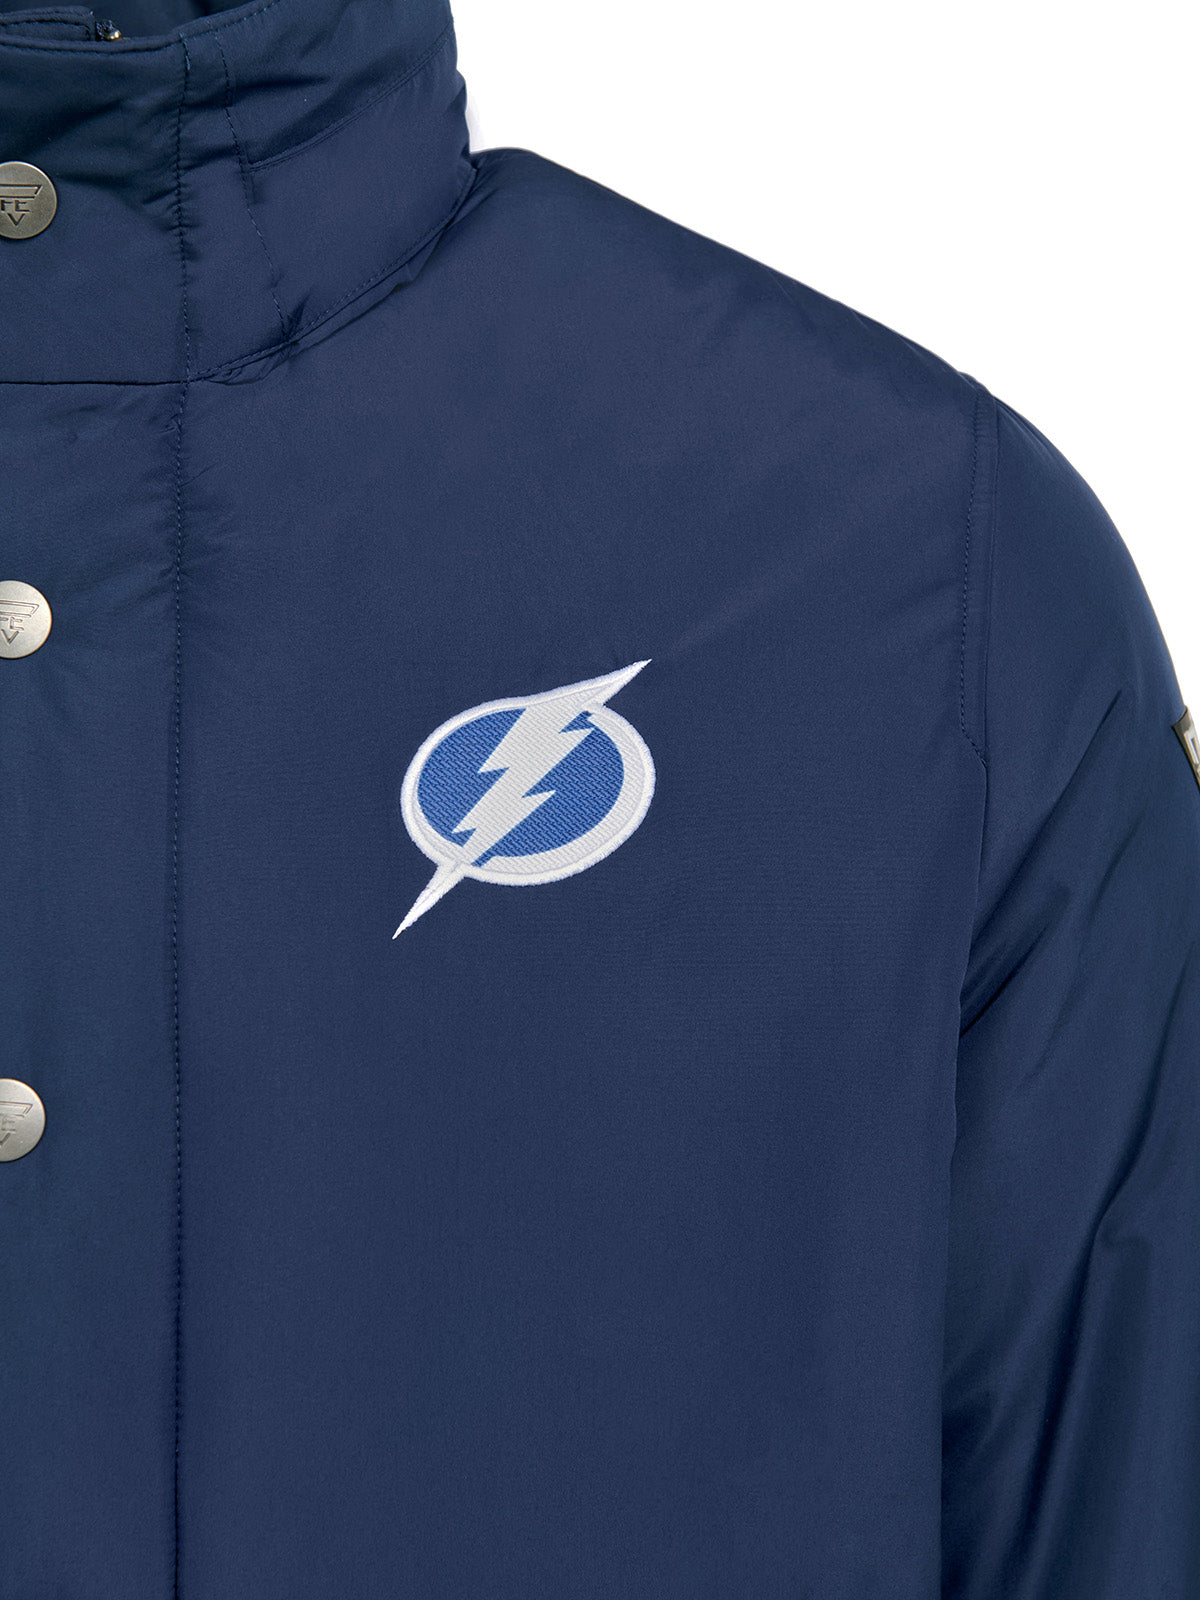 Tampa Bay Lightning Coach's Jacket